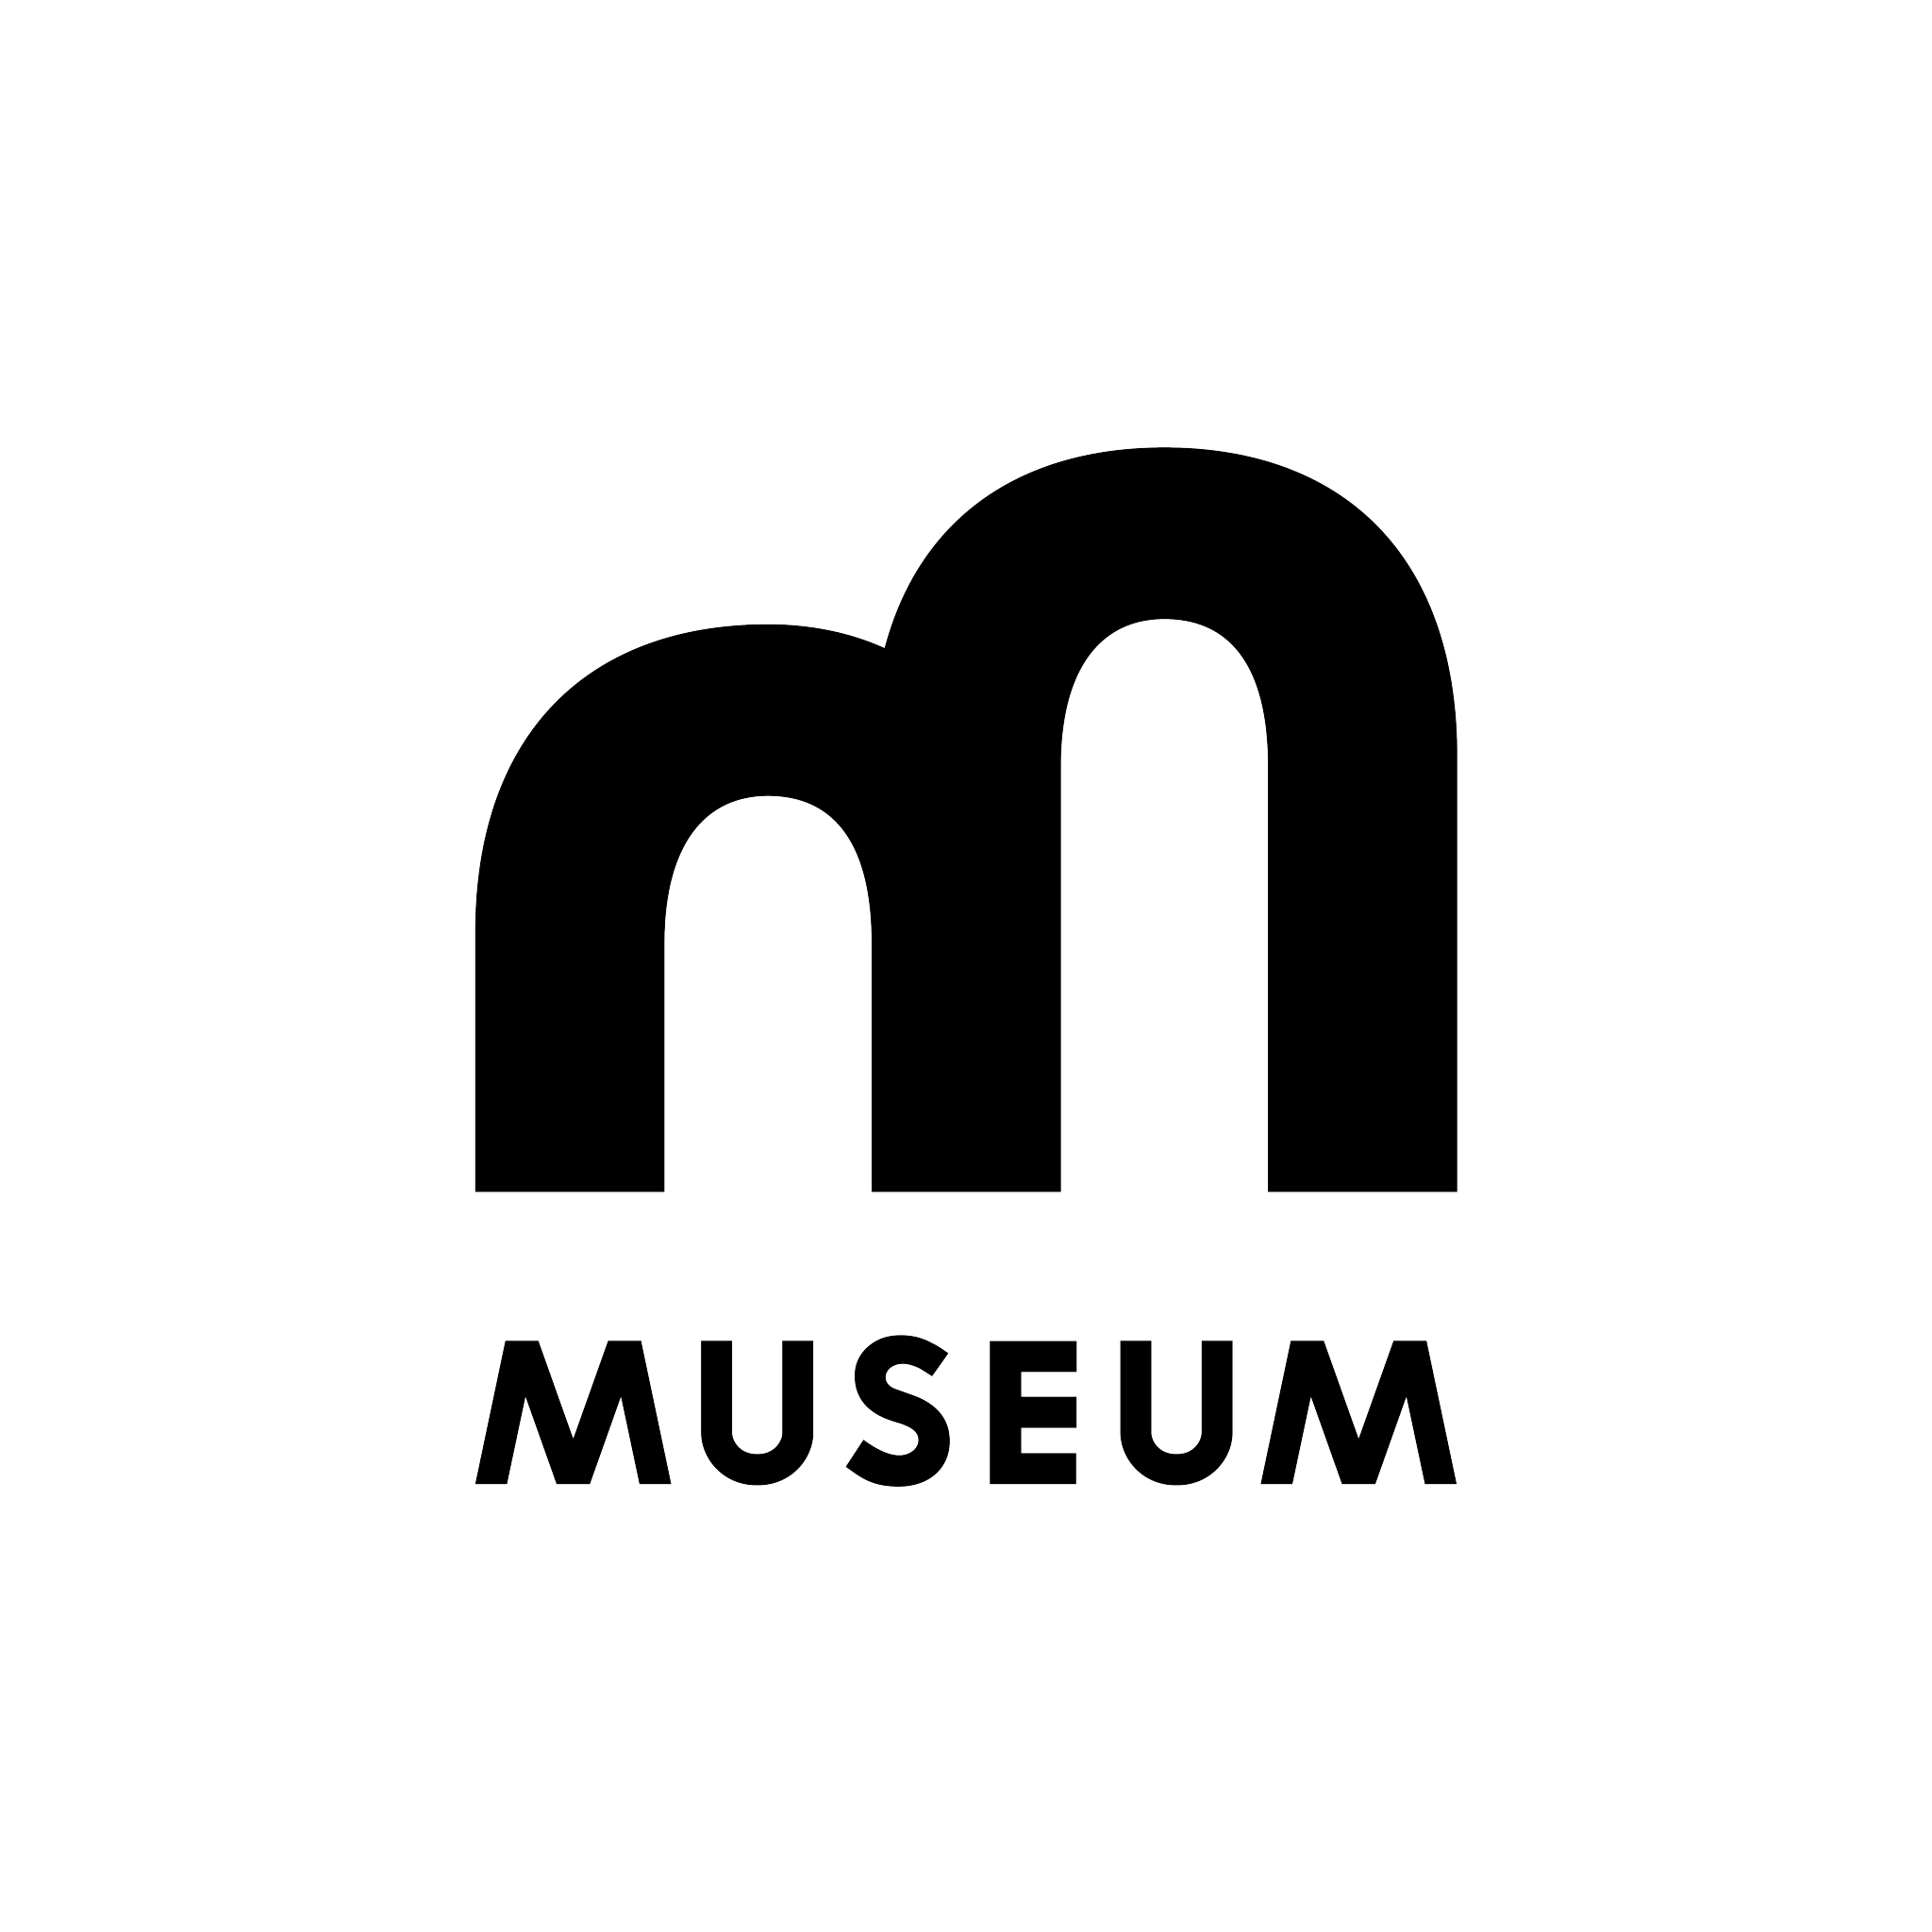 Museum Logo - Logo museum 2017.png